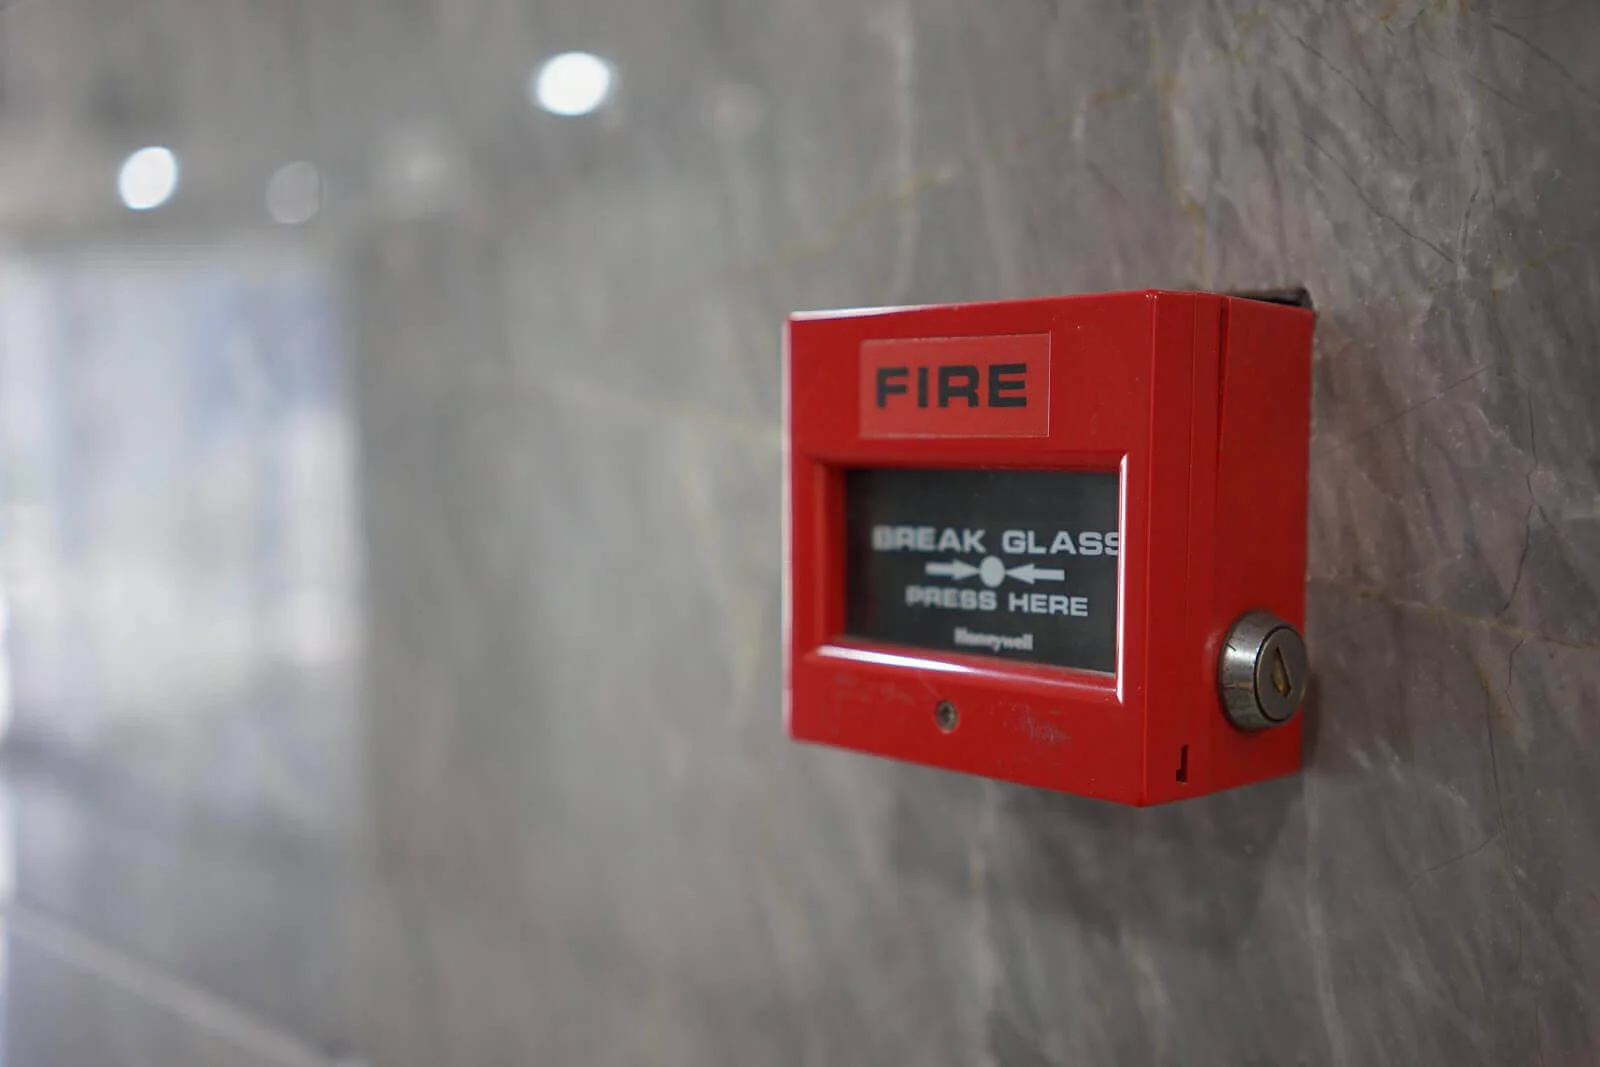 Effective fire safety tips for startup entrepreneurs